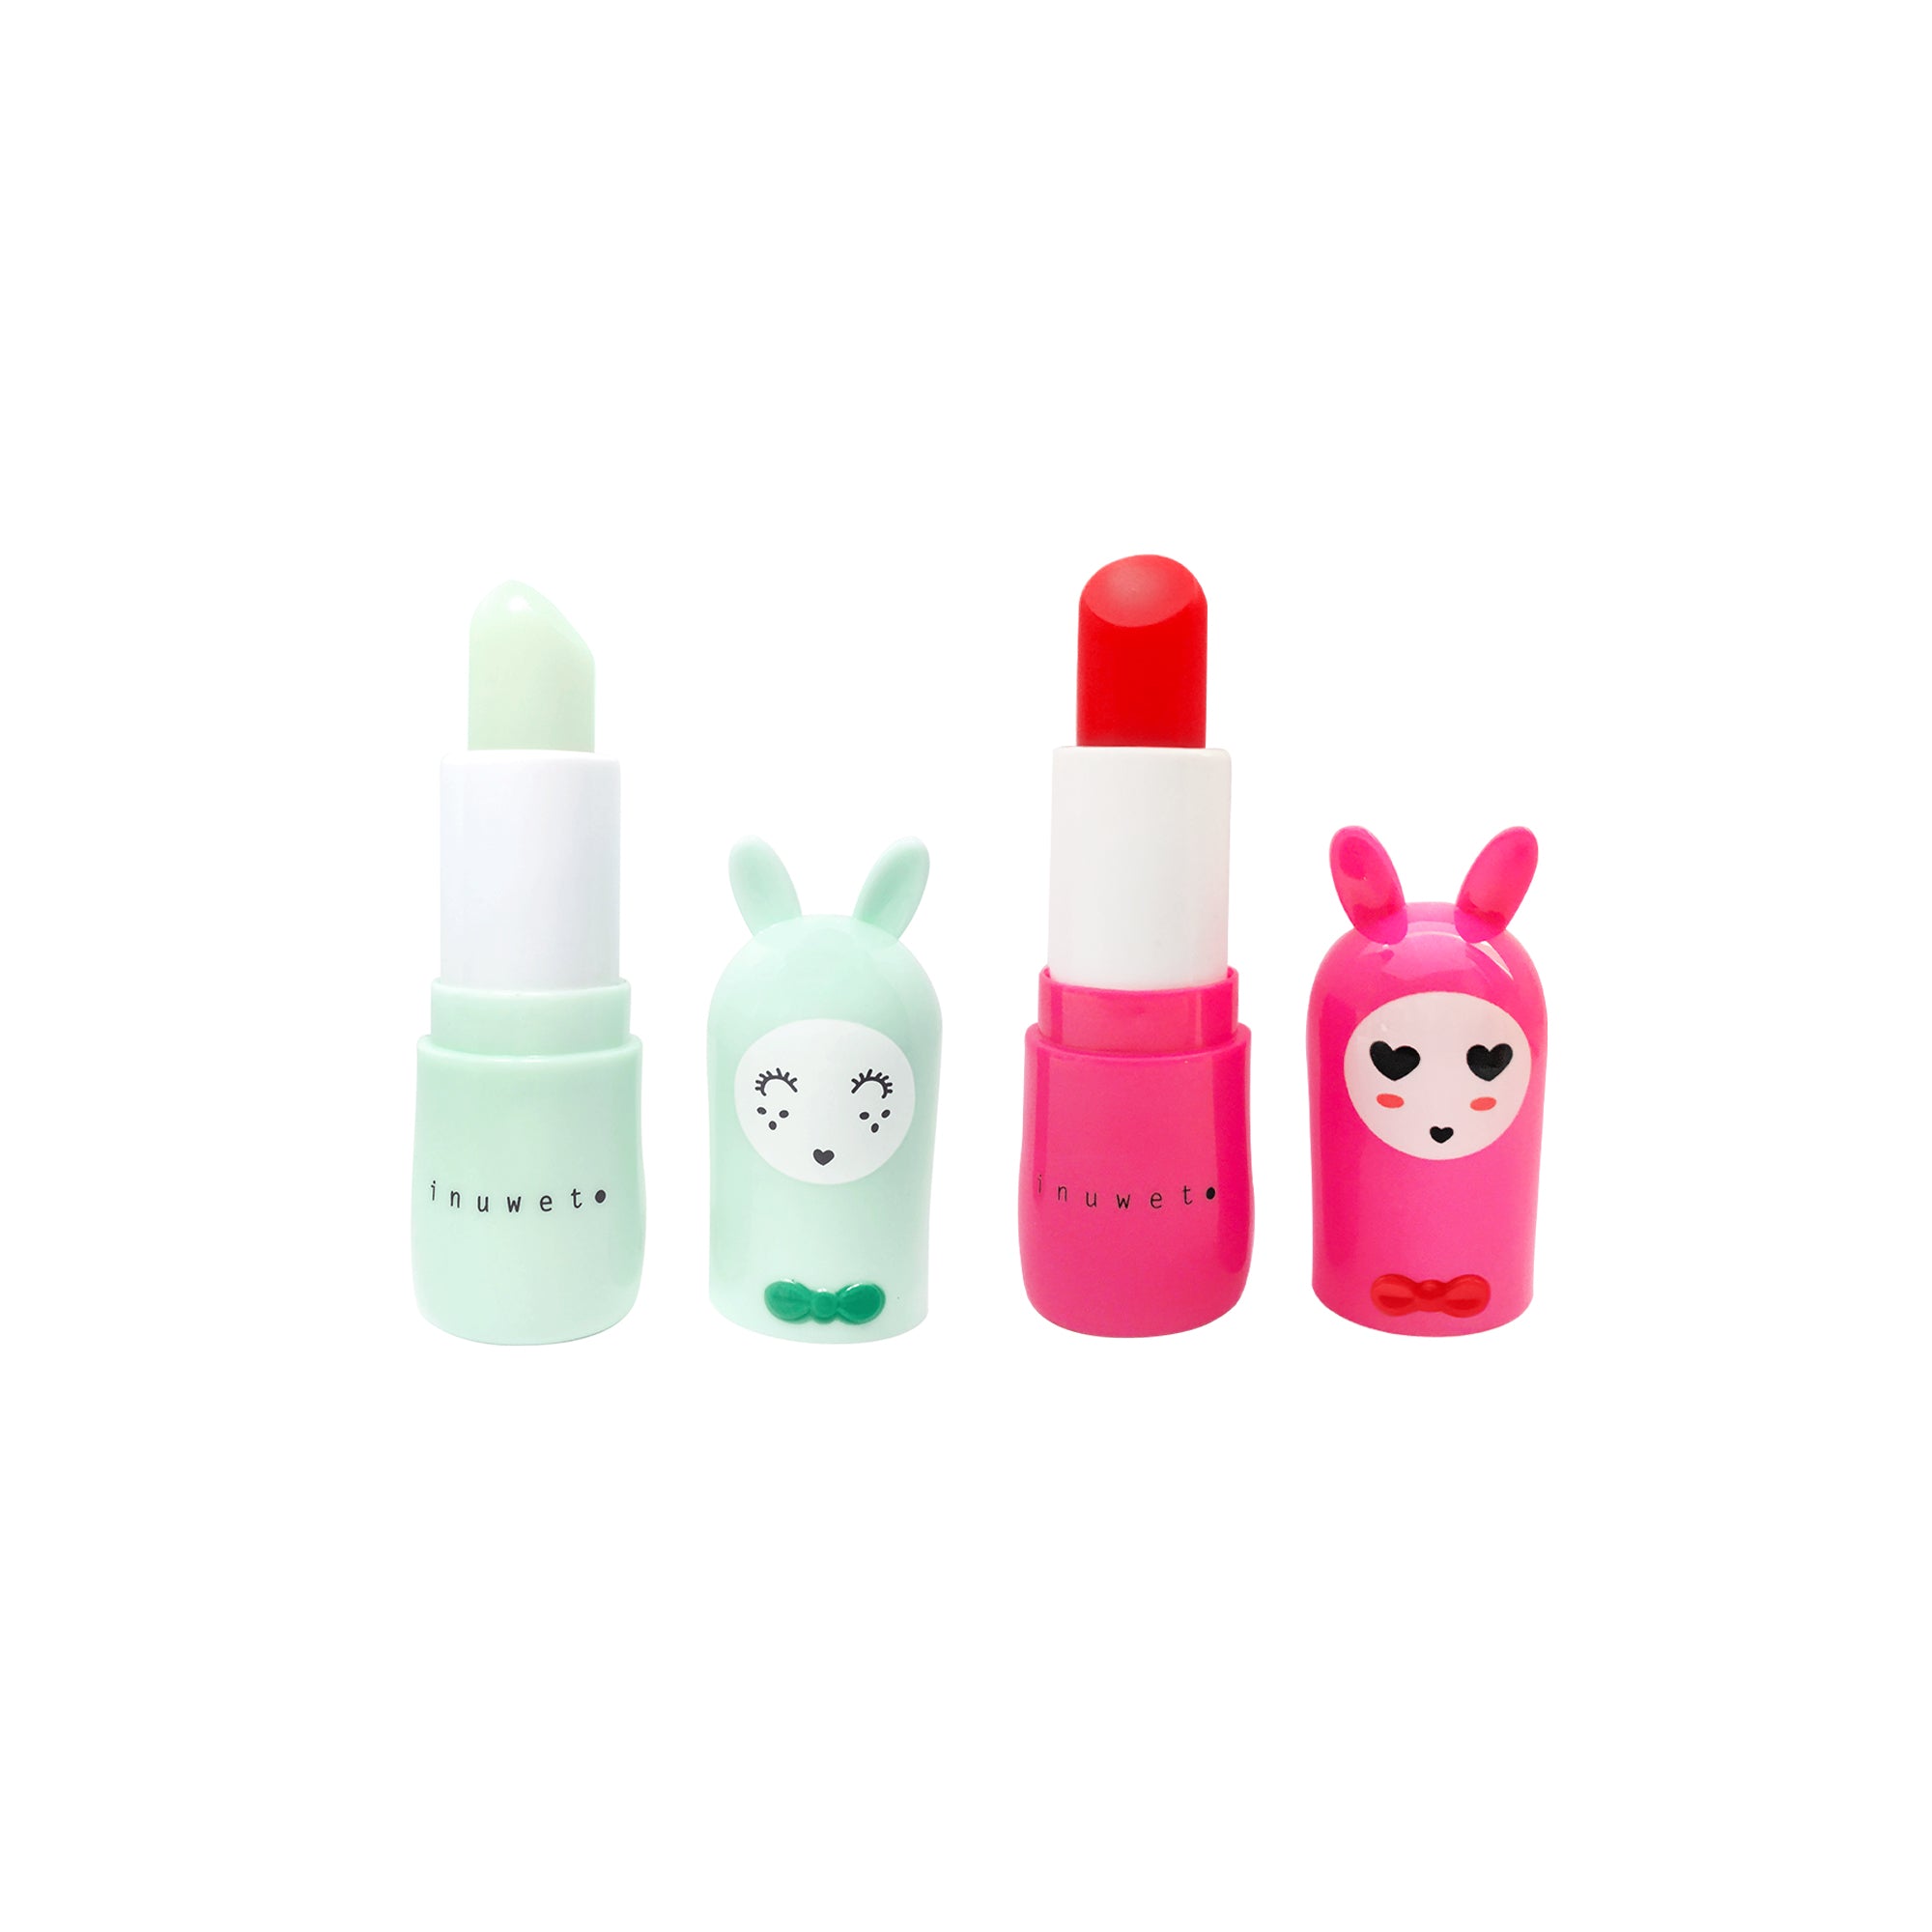 INUWET Bunny Lip Balm Cherry Duo Gift Set - Apple & Cherry